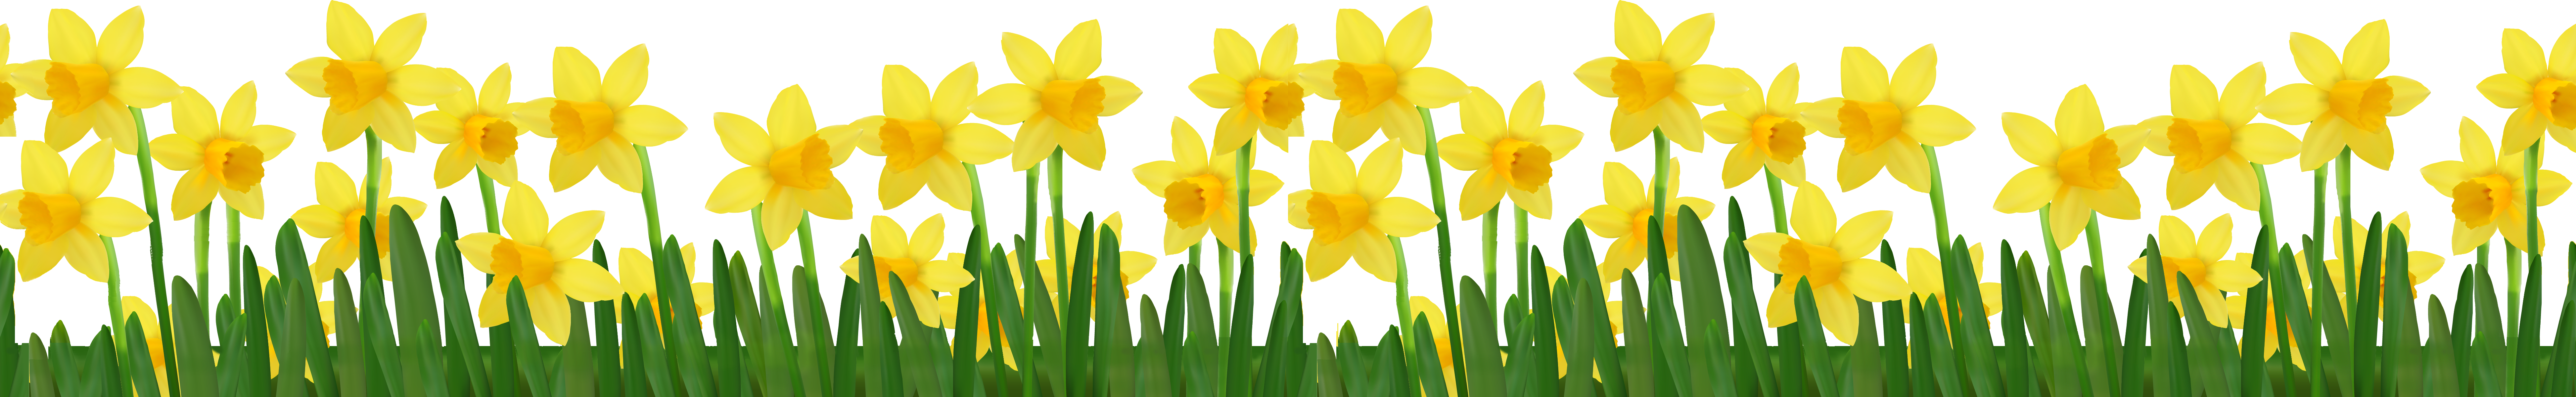 Clip n clear daffodils. Daffodil clipart grass